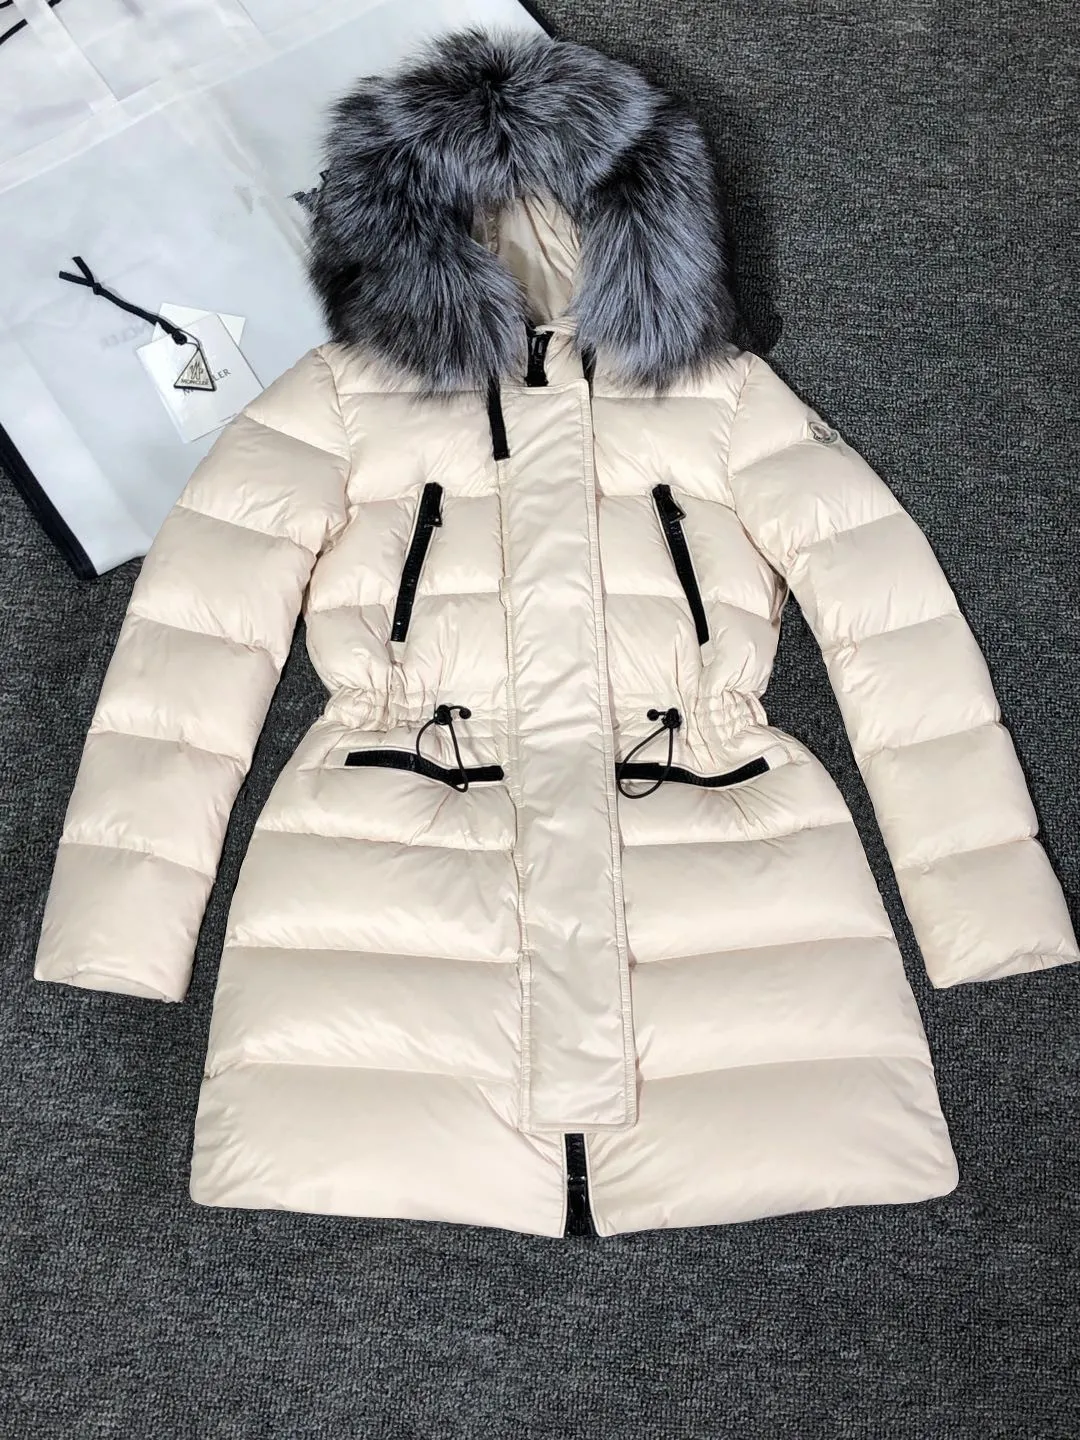 Women`s Winter jackets White Duck Down Jacket Woman long Puffer Coat thick warm Women Real wolf Fur Collar coats Hooded Waterproof parkas2style to choose111